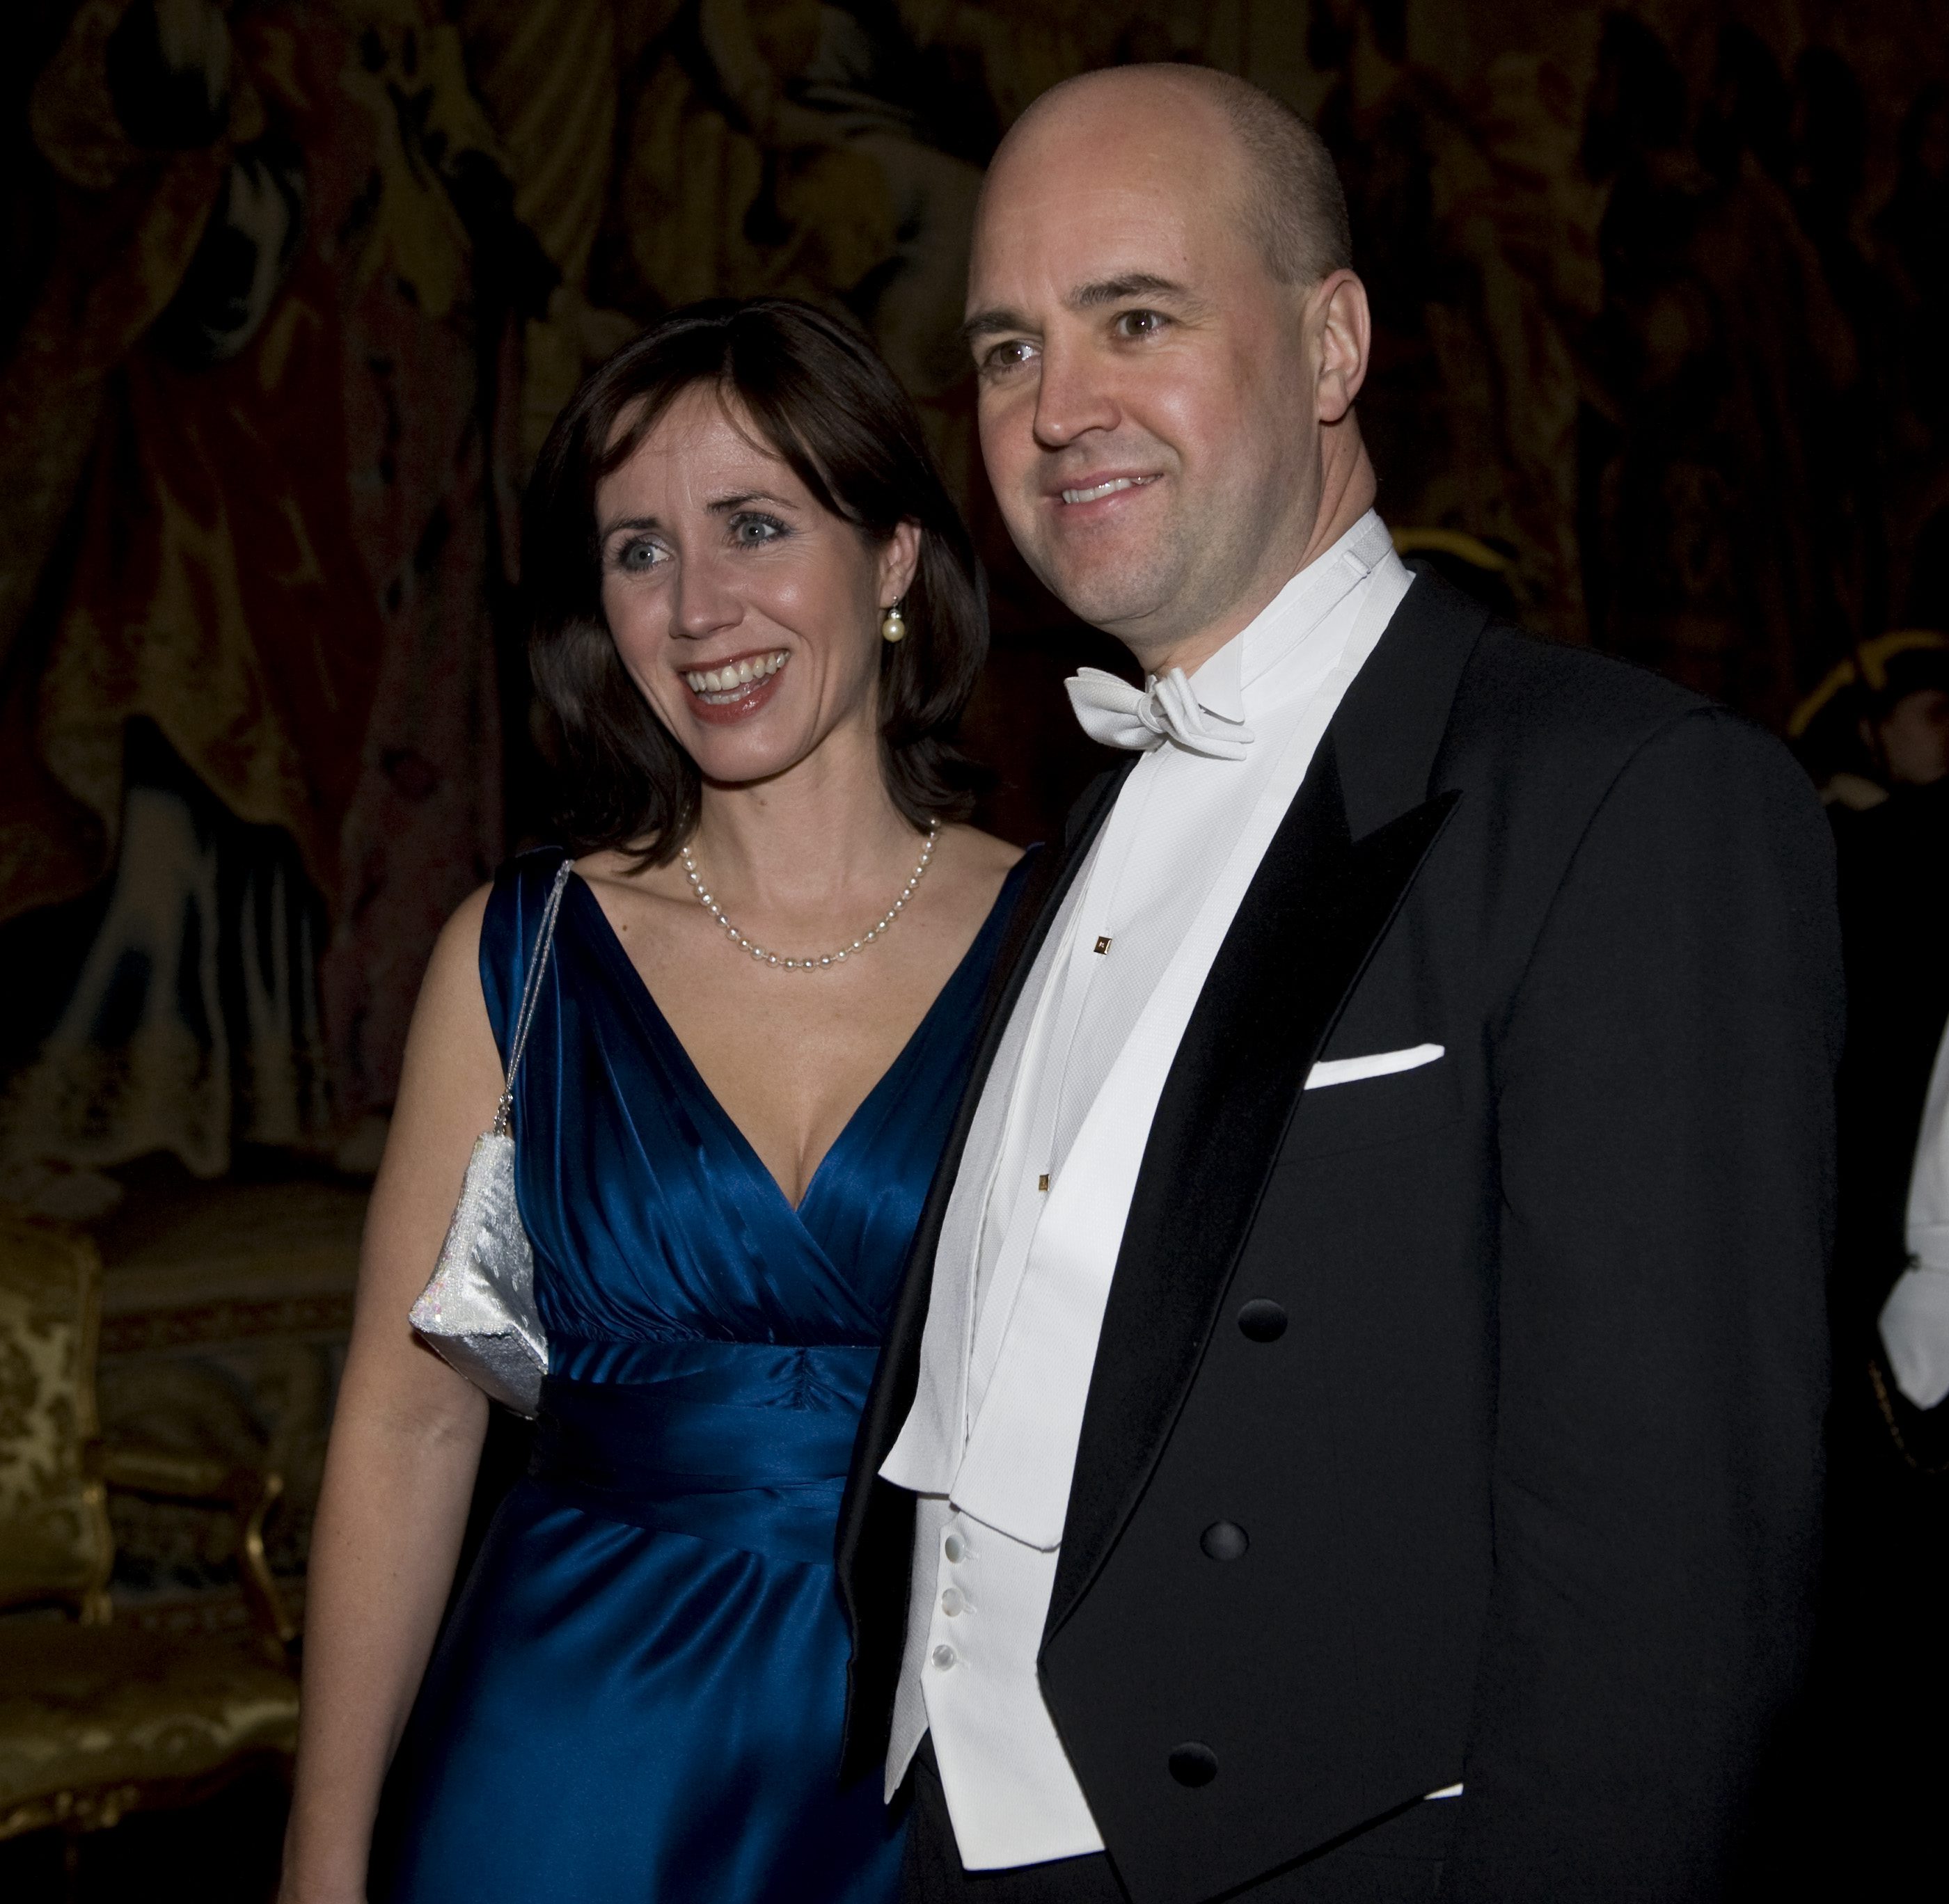 Paret Reinfeldt tog emot de inbjudna i trappan i Sagerska palatset.